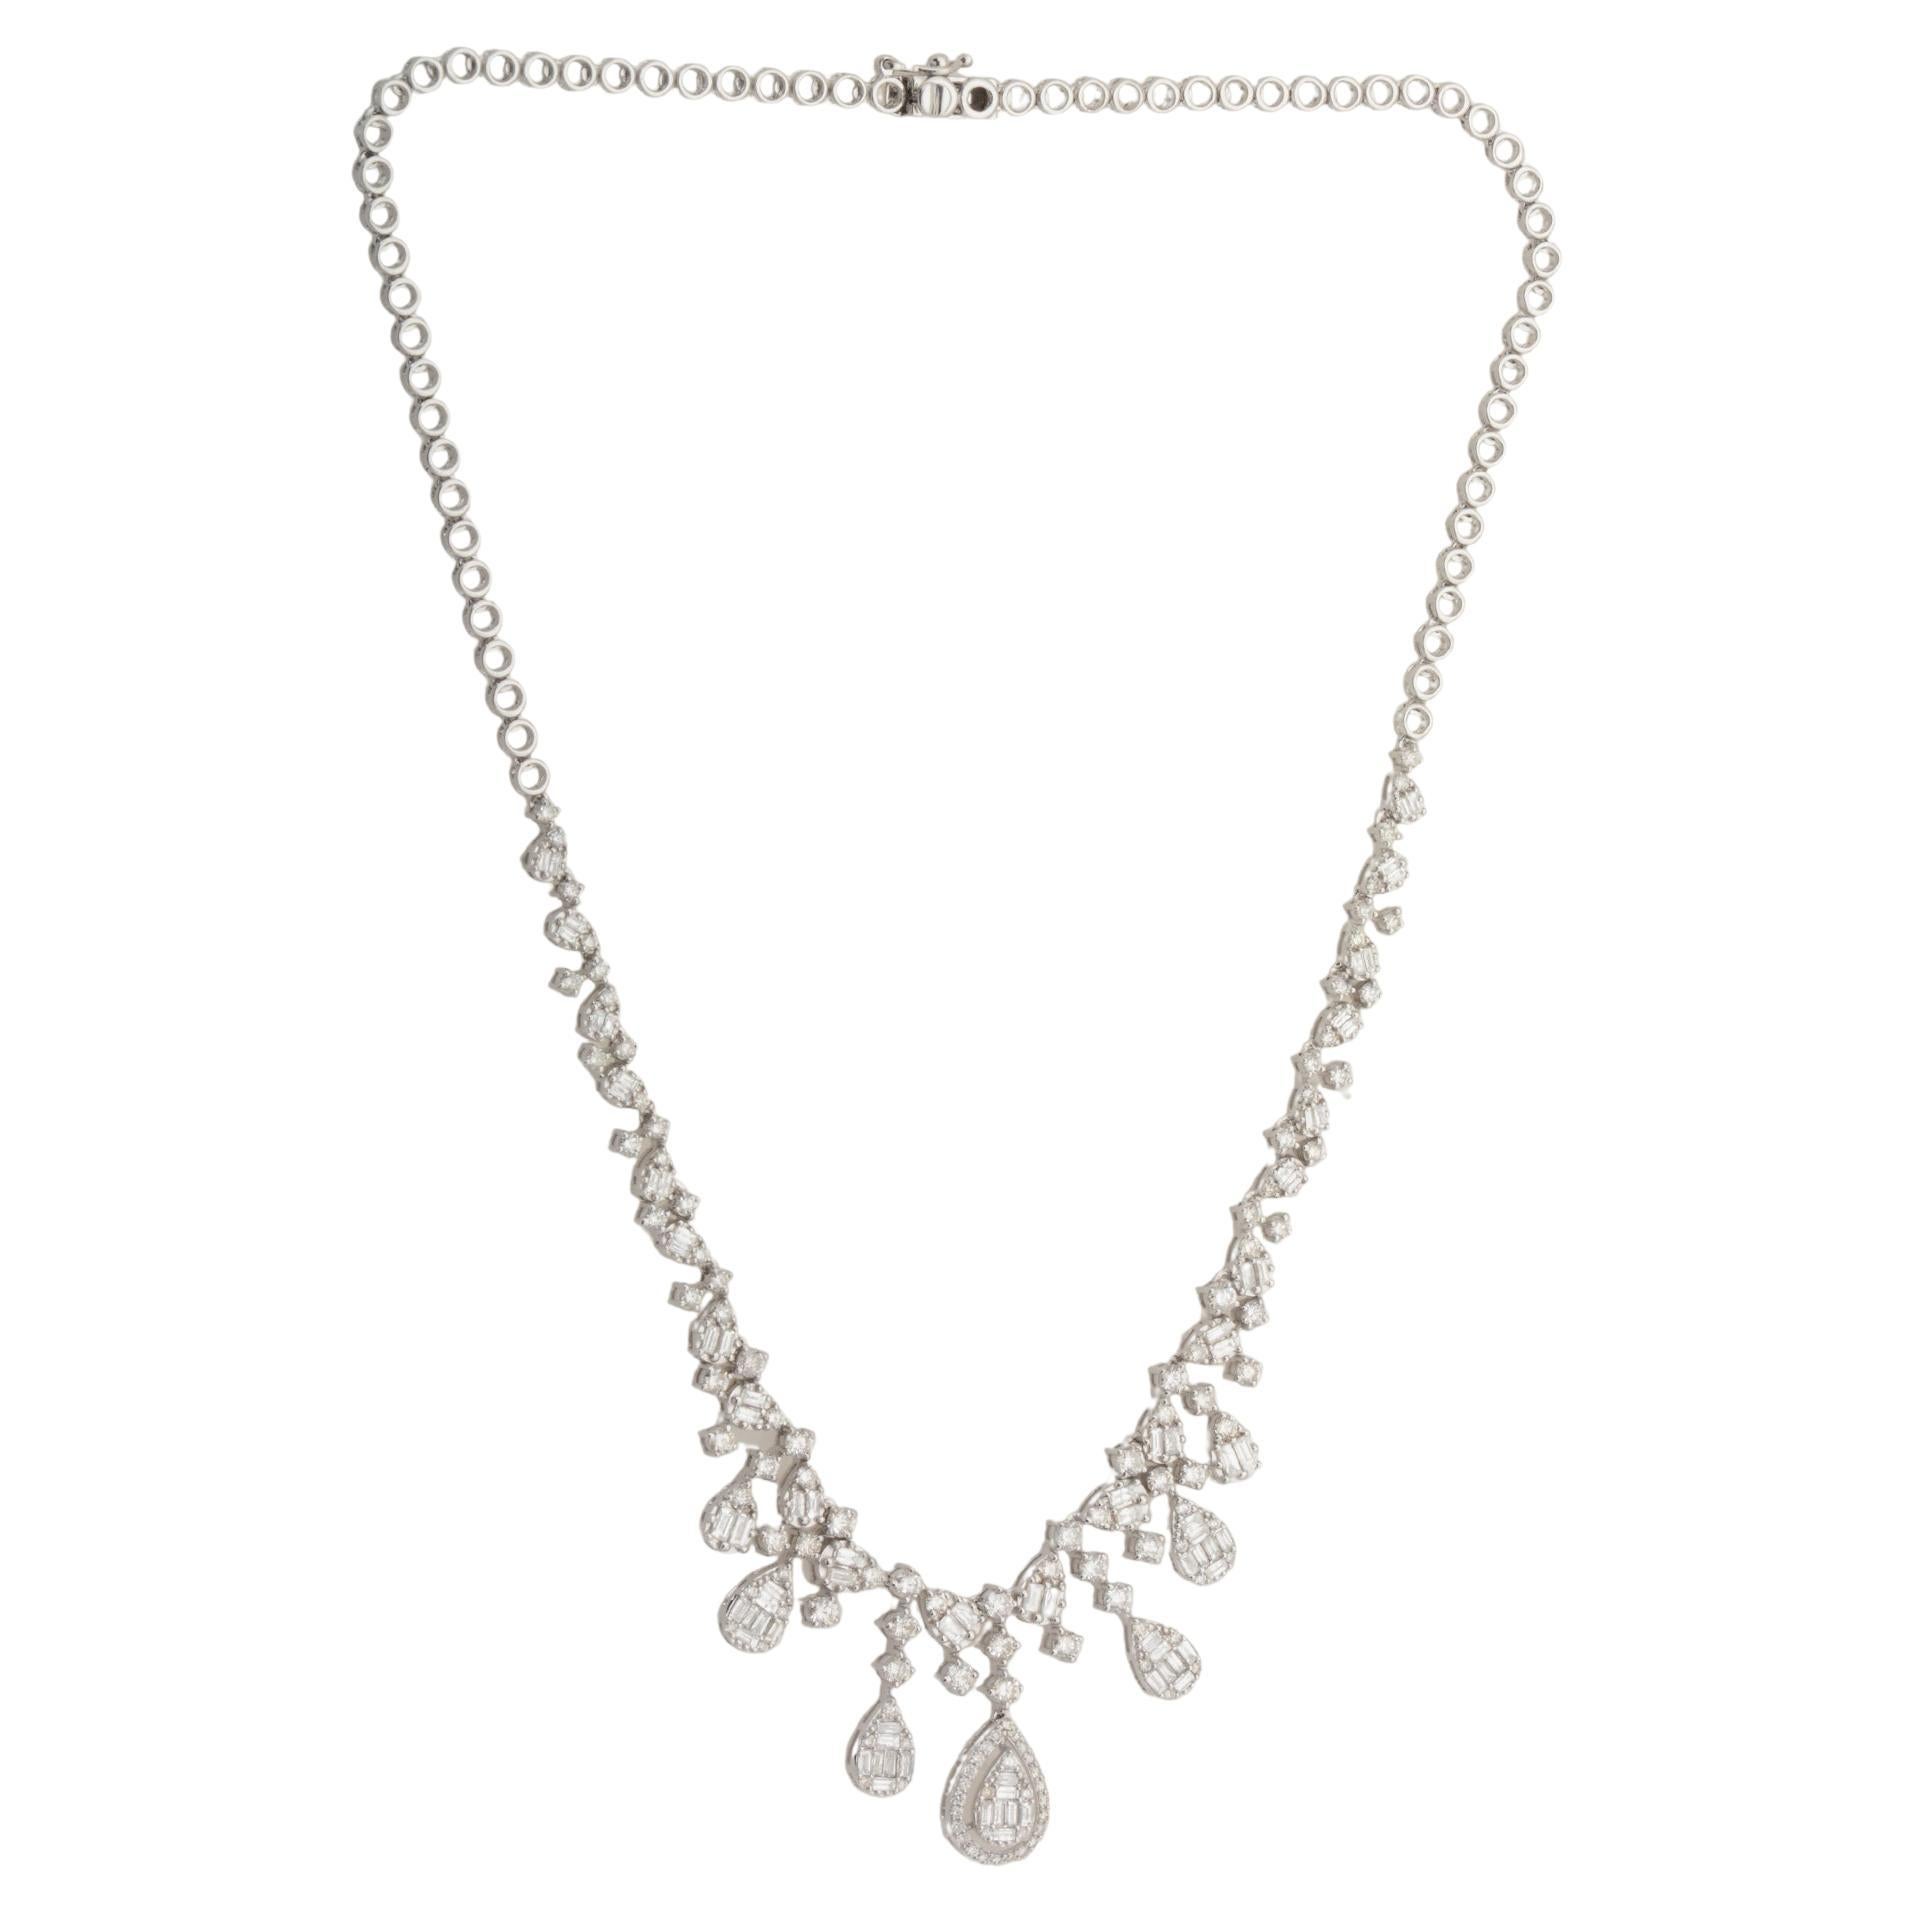 7.40 Carat SI Clarity HI Color Diamond Necklace 14 Karat White Gold Fine Jewelry